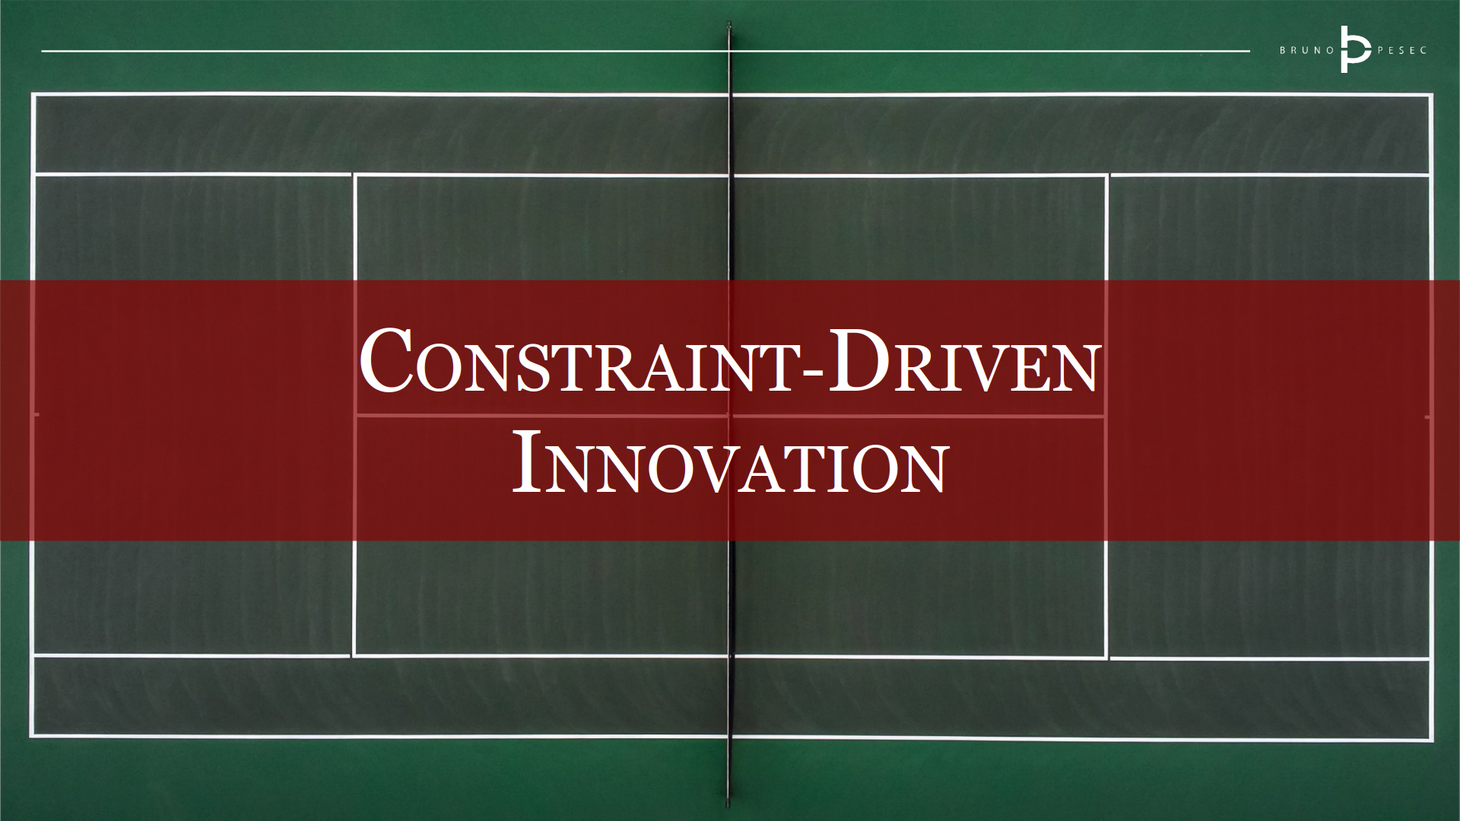 Constraint-driven innovation